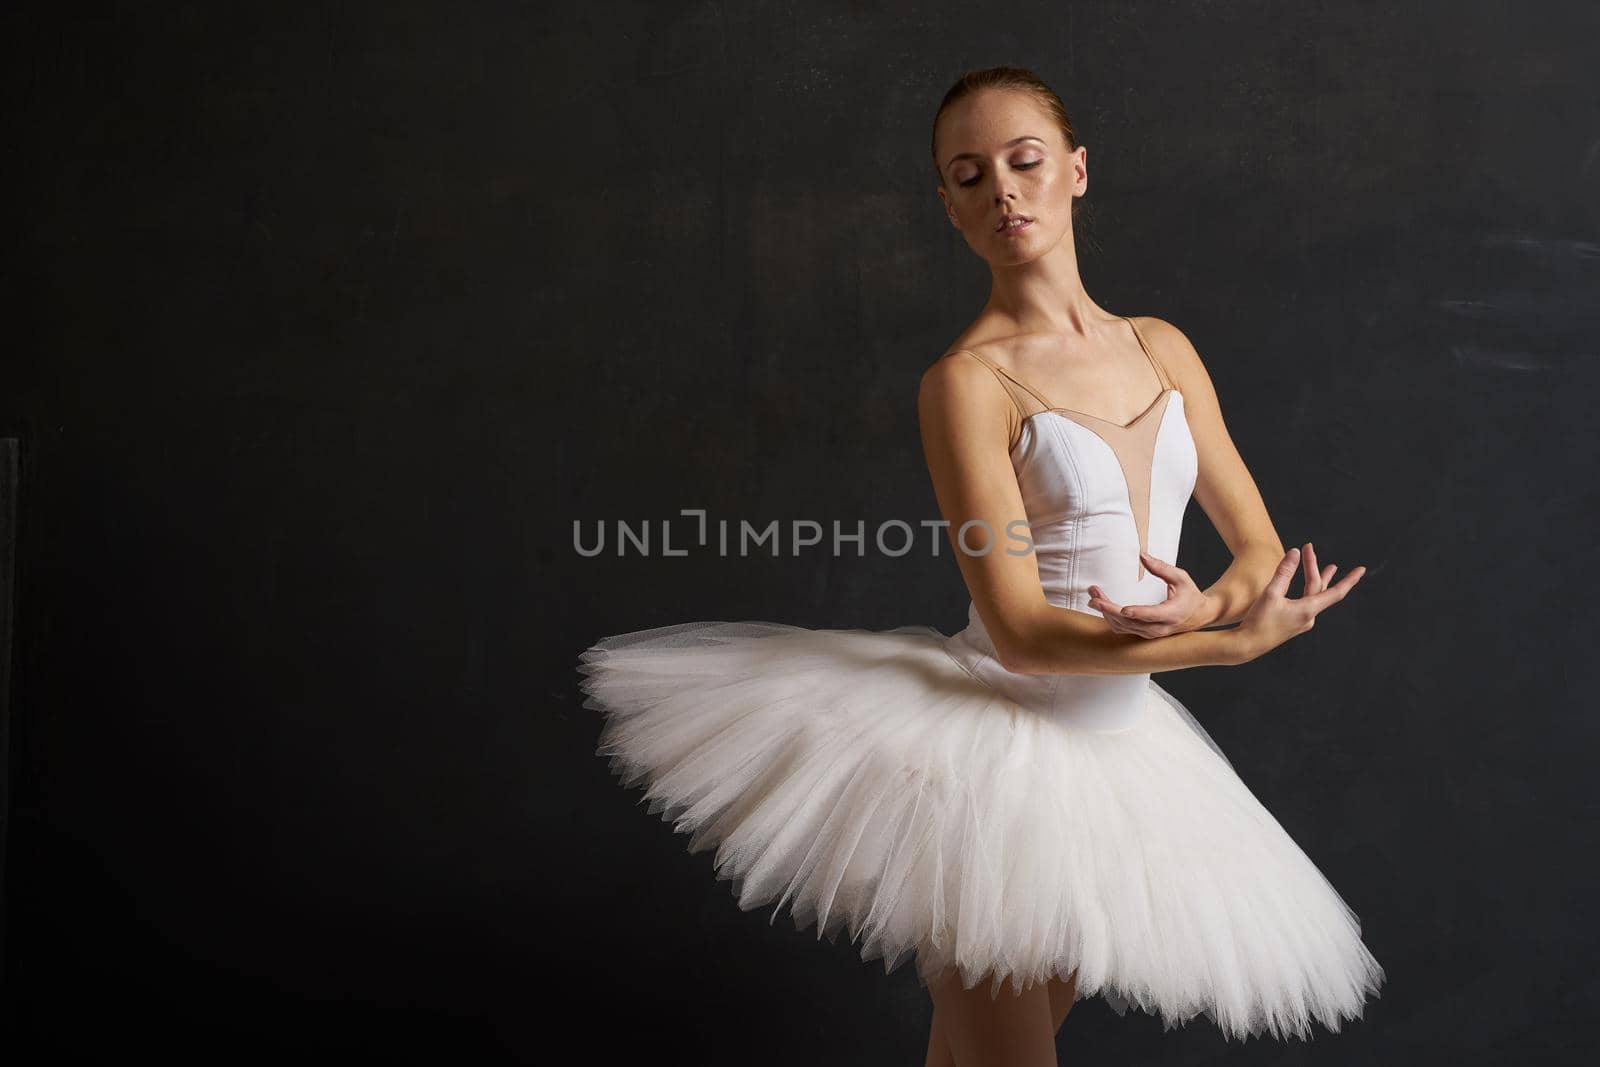 ballerina in a white tutu dance performance silhouette dark background. High quality photo